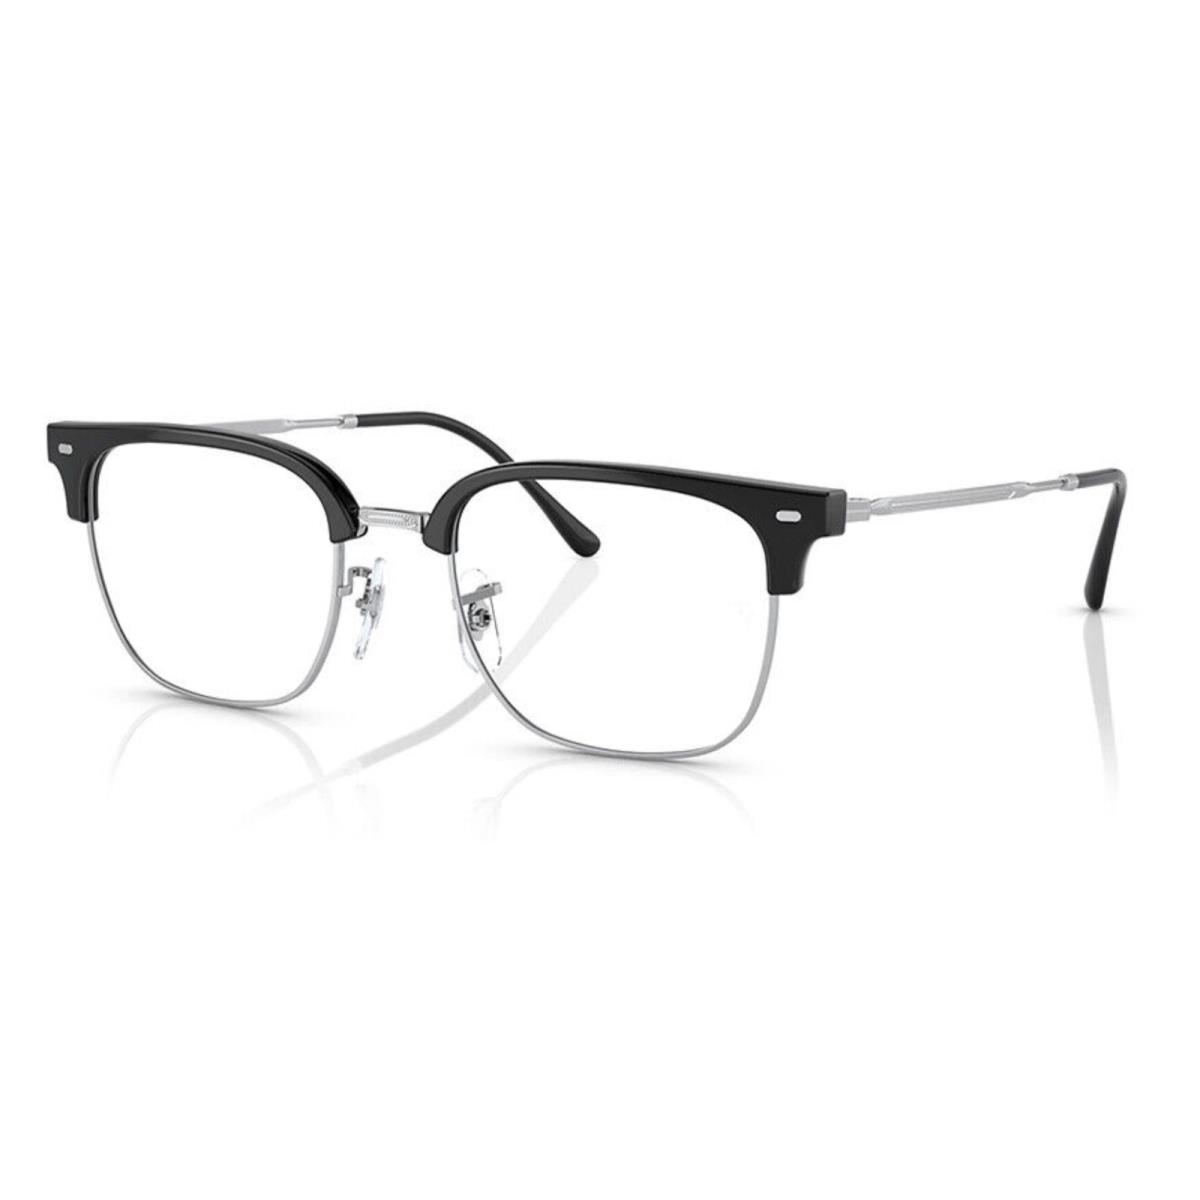 Ray-ban Clubmaster Rx-able Eyeglasses RB 7216 2000 49-20 Black Silver Frames - Frame: Black & Silver